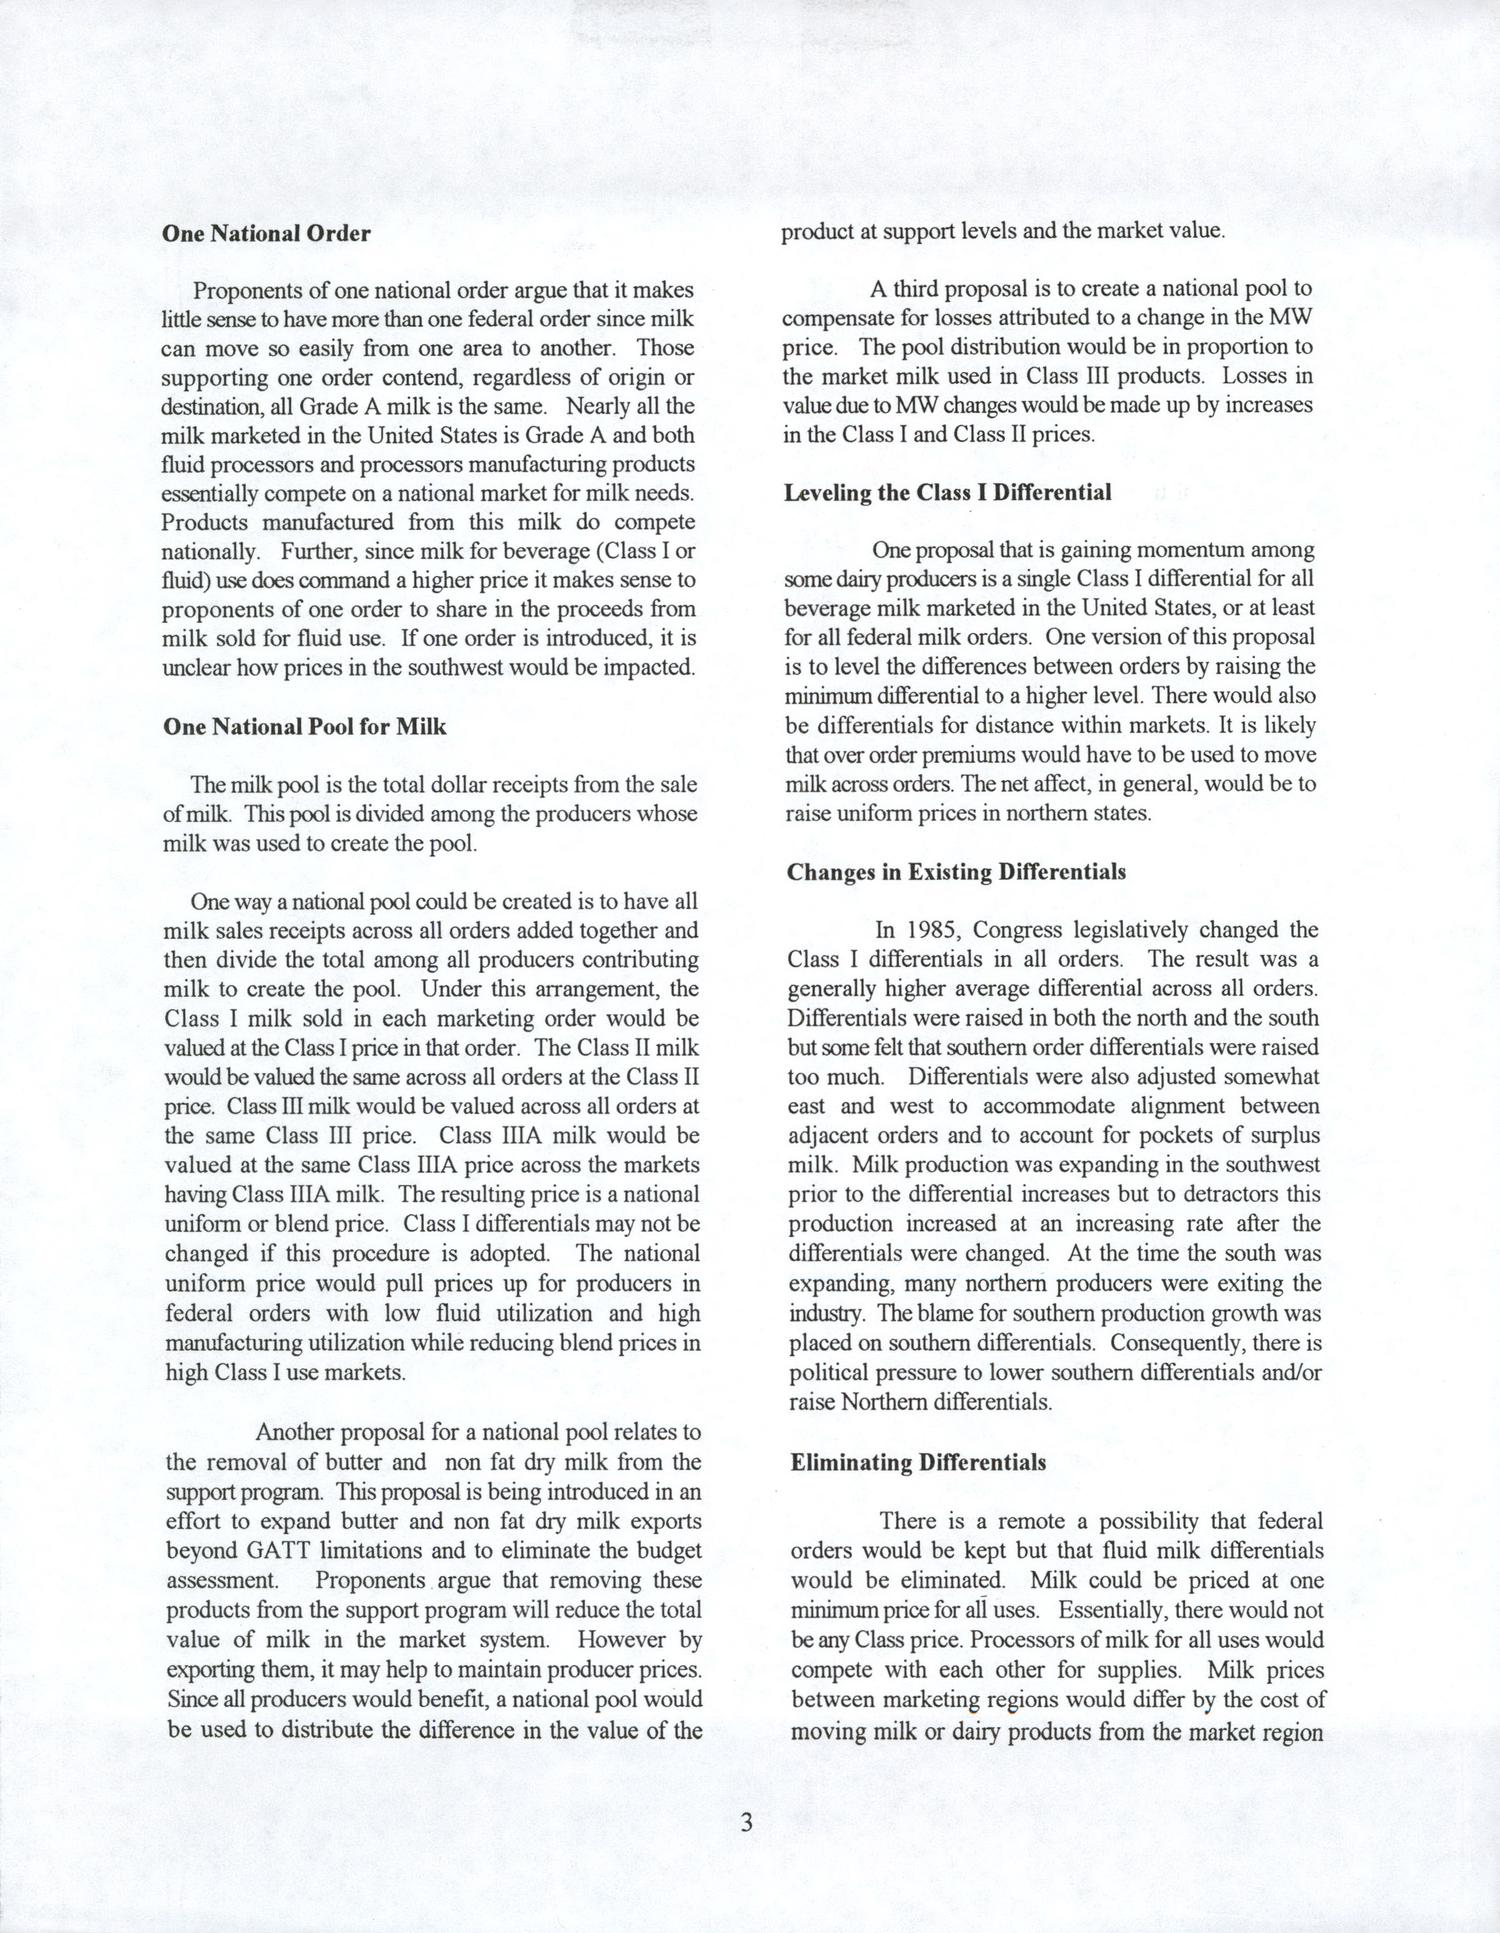 Balanced Dairying: Economics, Volume 15, Number 1, May 1995
                                                
                                                    3
                                                